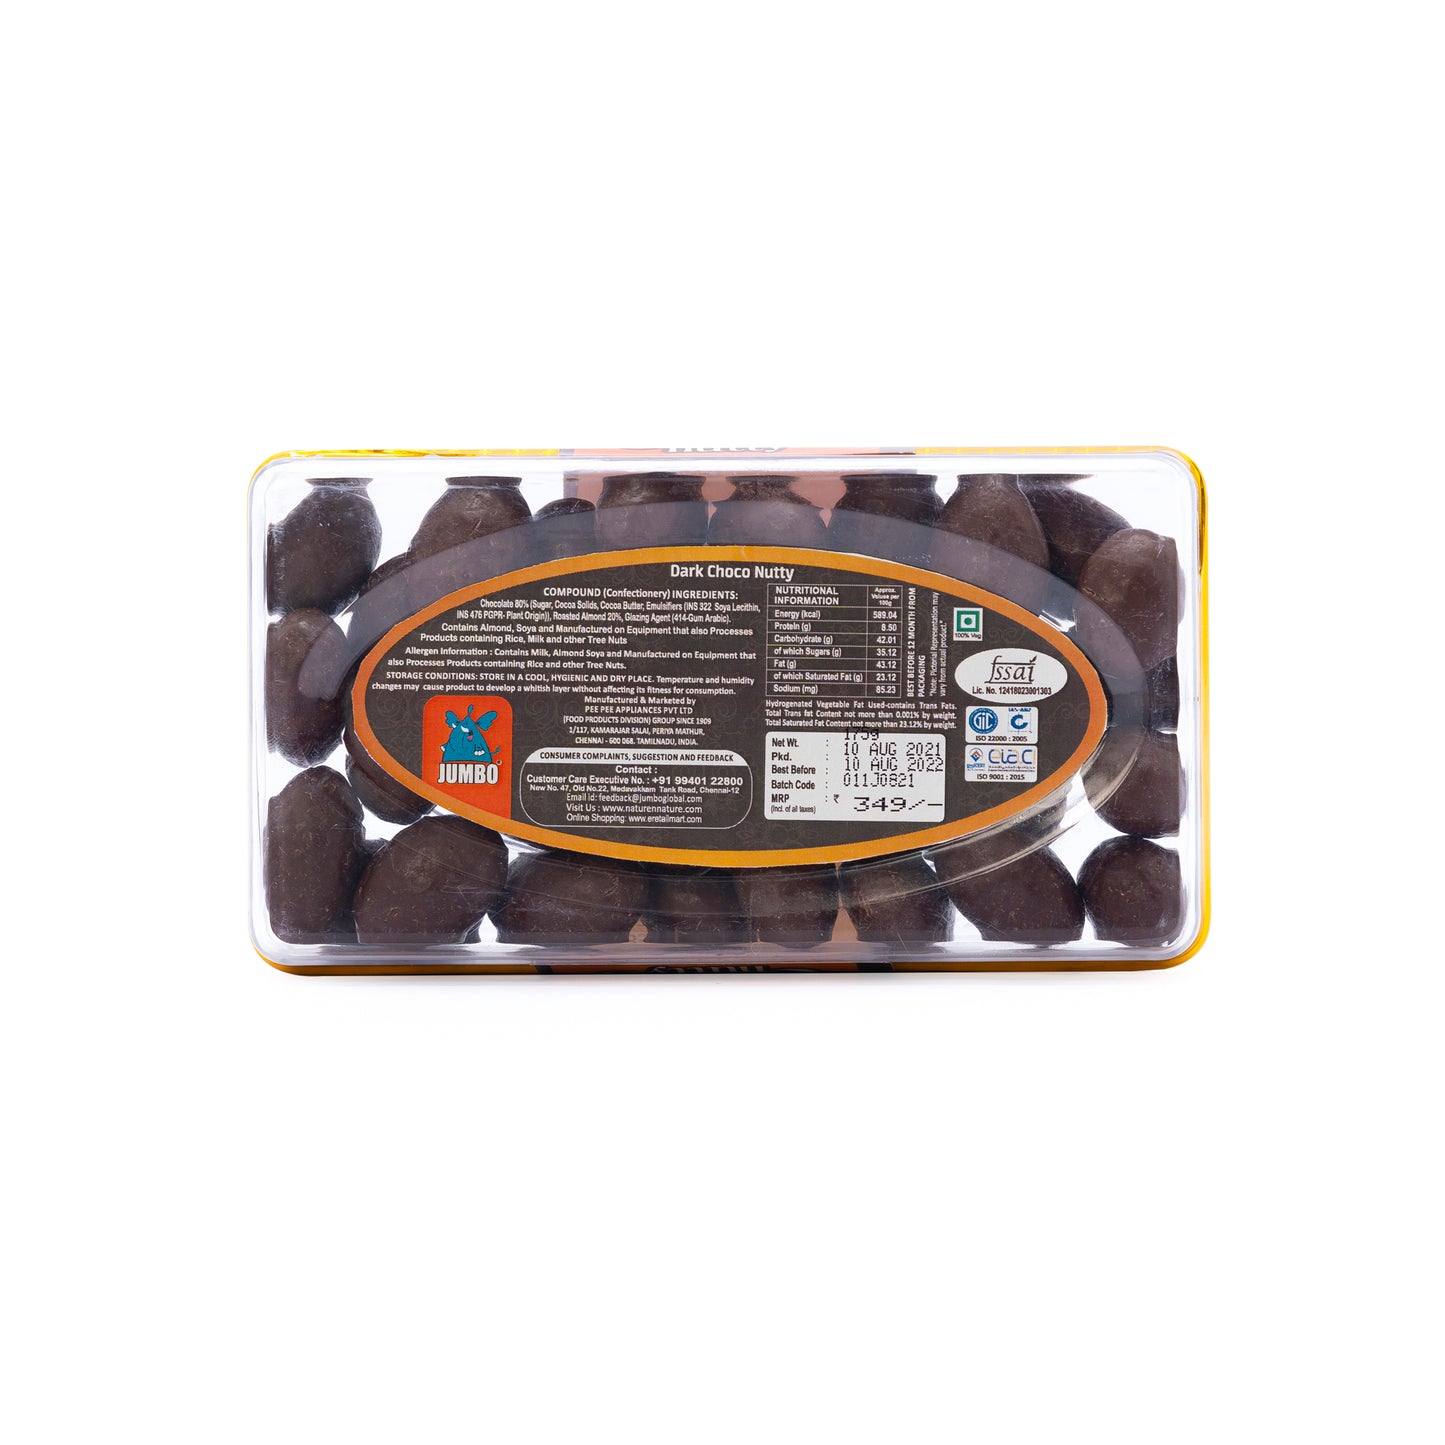 JUMBO Dark Choco Nutty, Dark Chocolate Covered Nutty Roasted Almonds, 175g Deluxe Pack